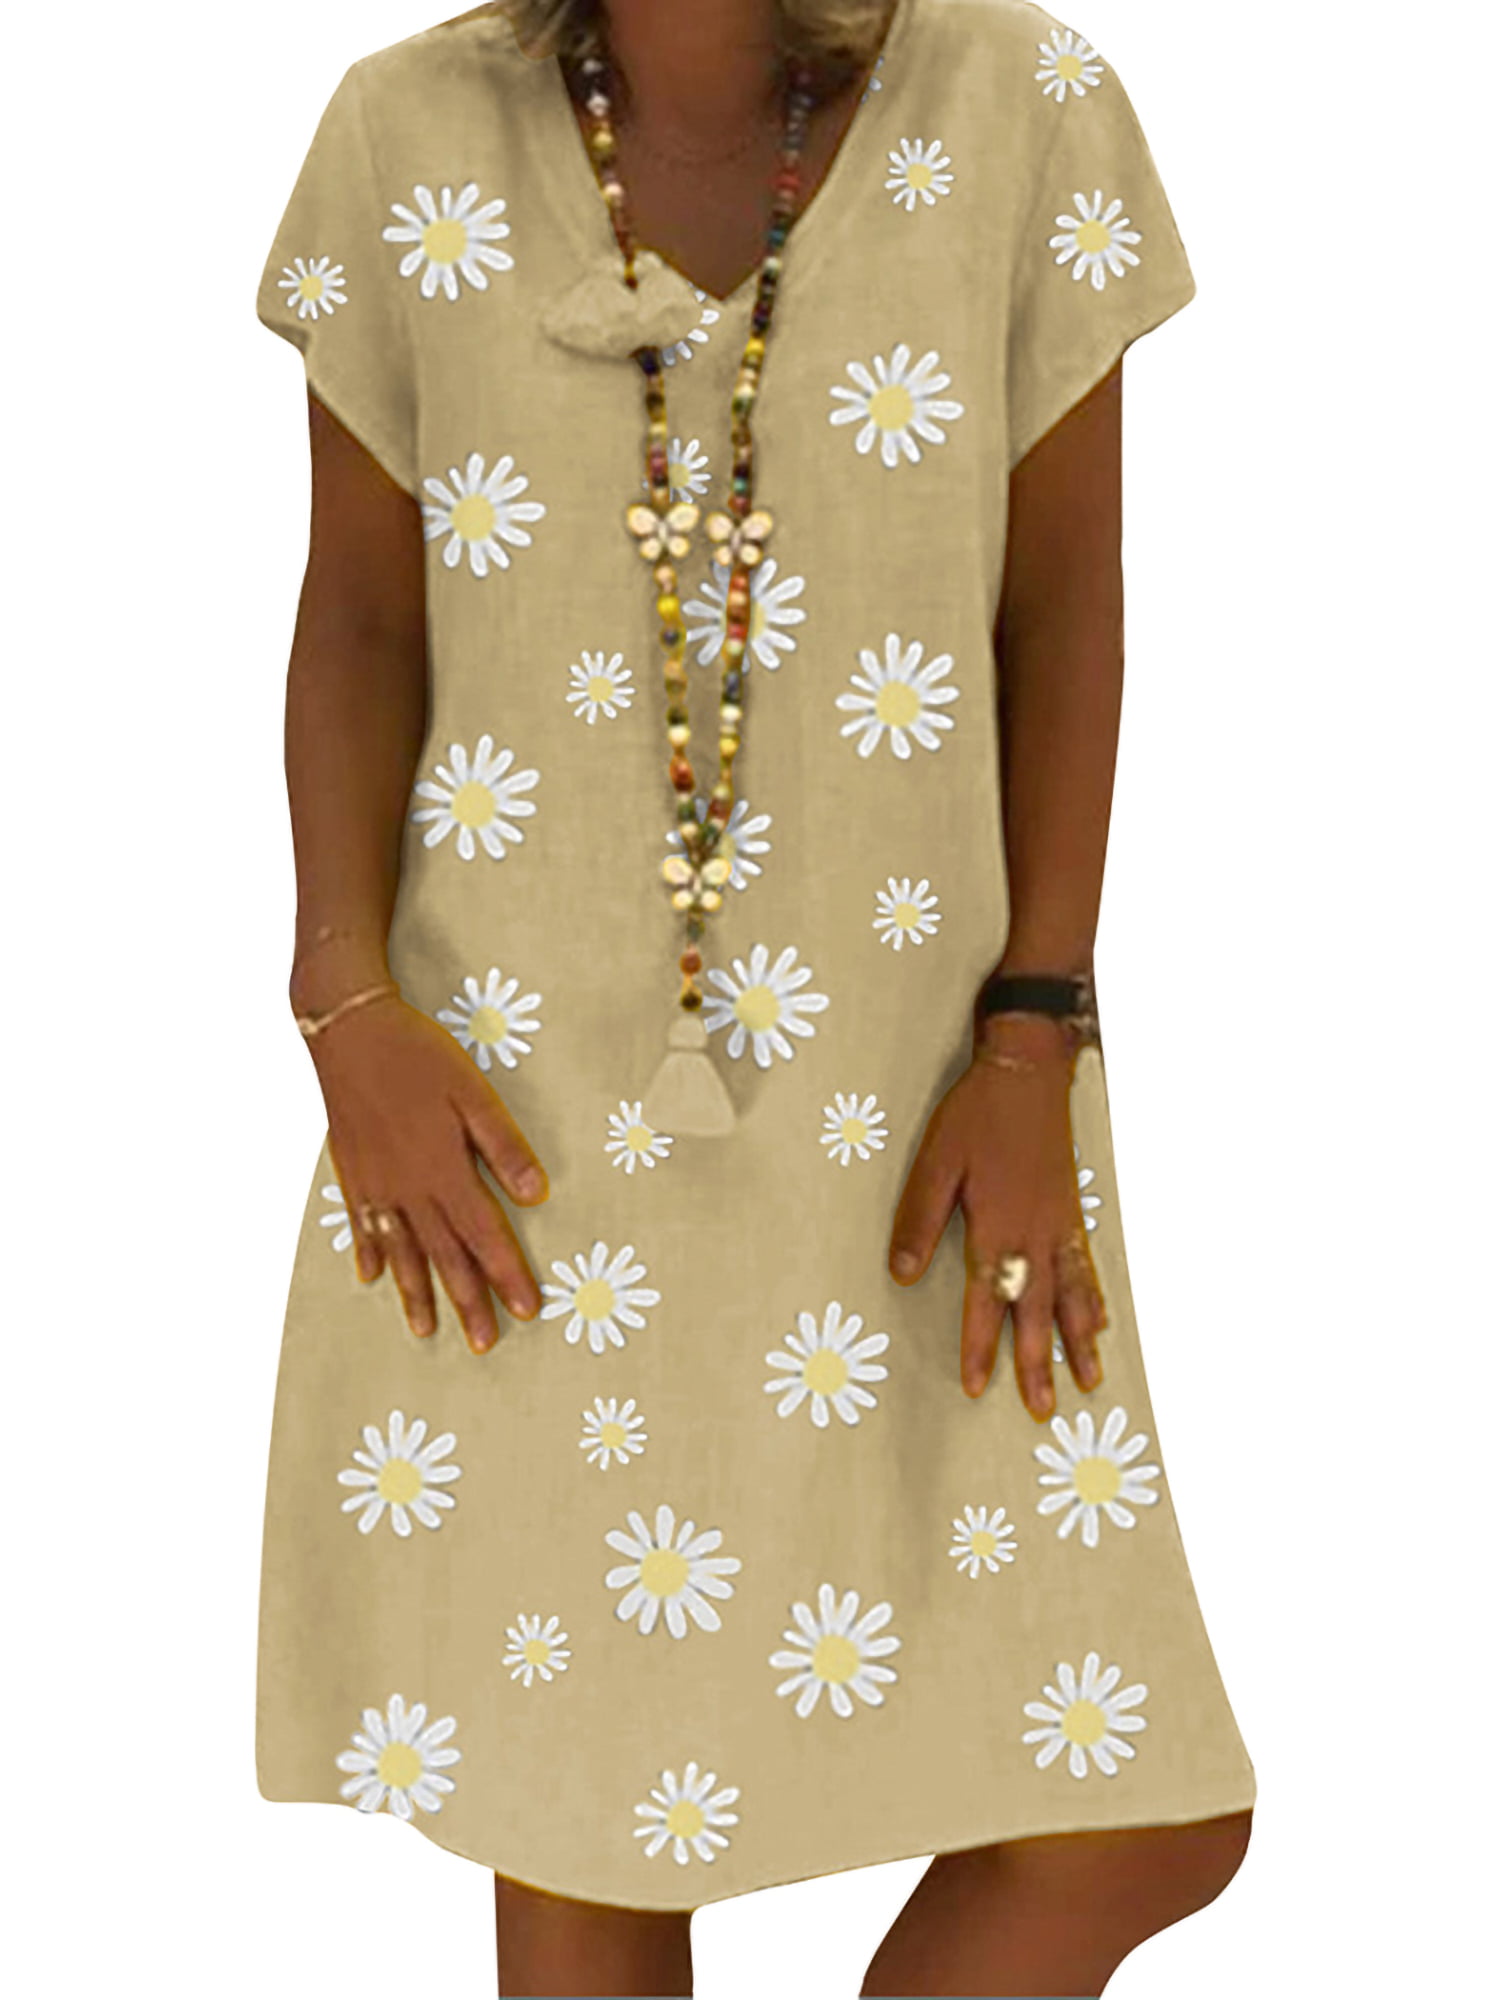 Fashion Women Lady Short Sleeve Daisy Print V-Neck Casual Kaftan Dress Plus Size 